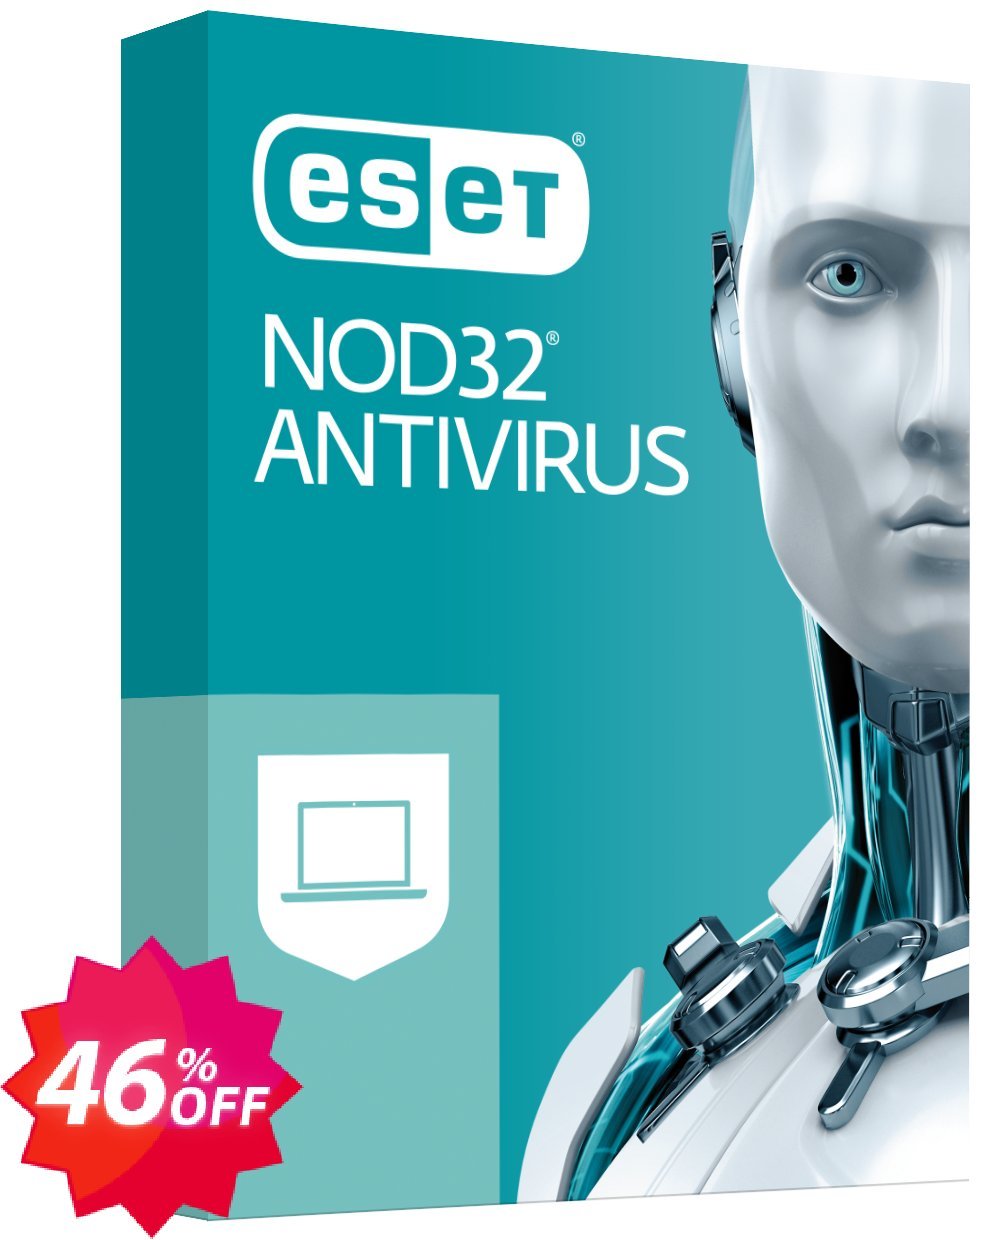 ESET NOD32 Antivirus Coupon code 46% discount 